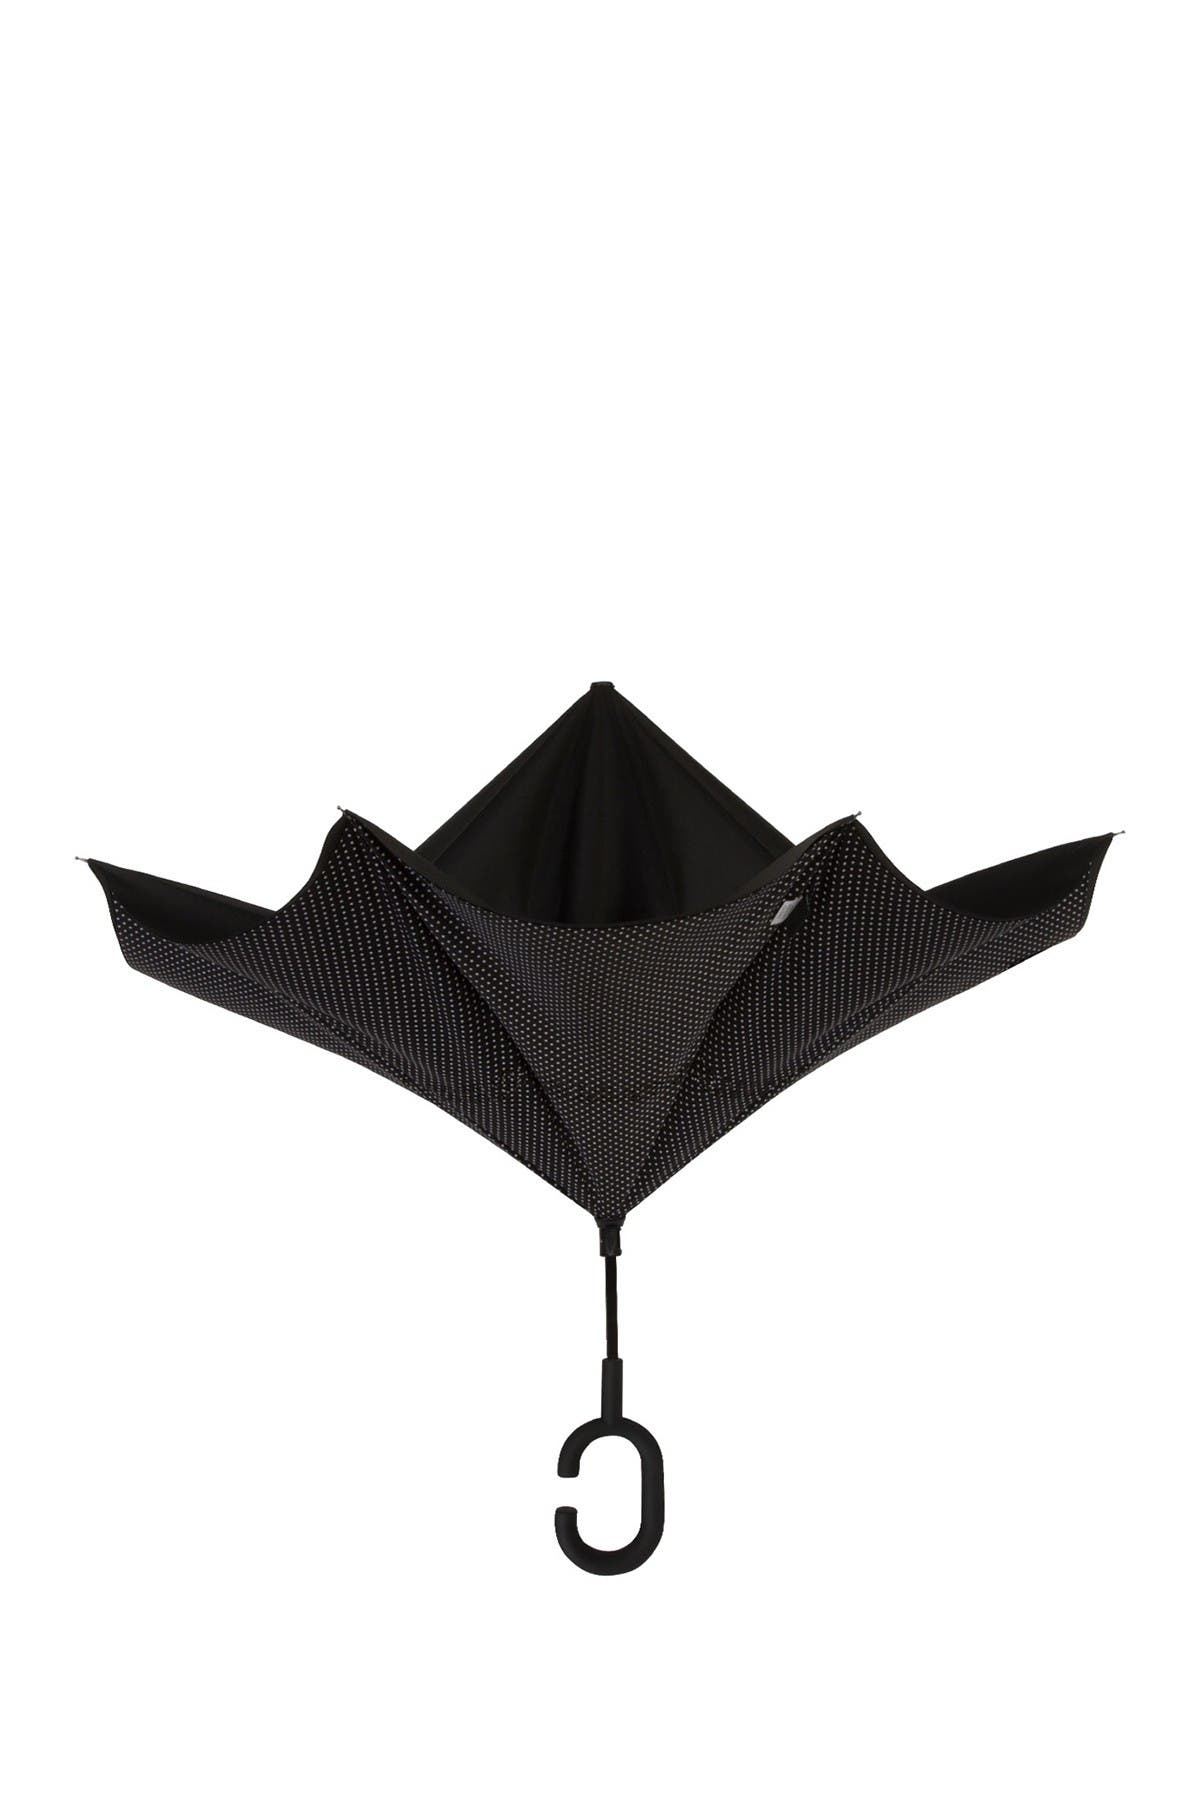 Shedrain Unbelievabrella Reversible Umbrella In Open Grey5